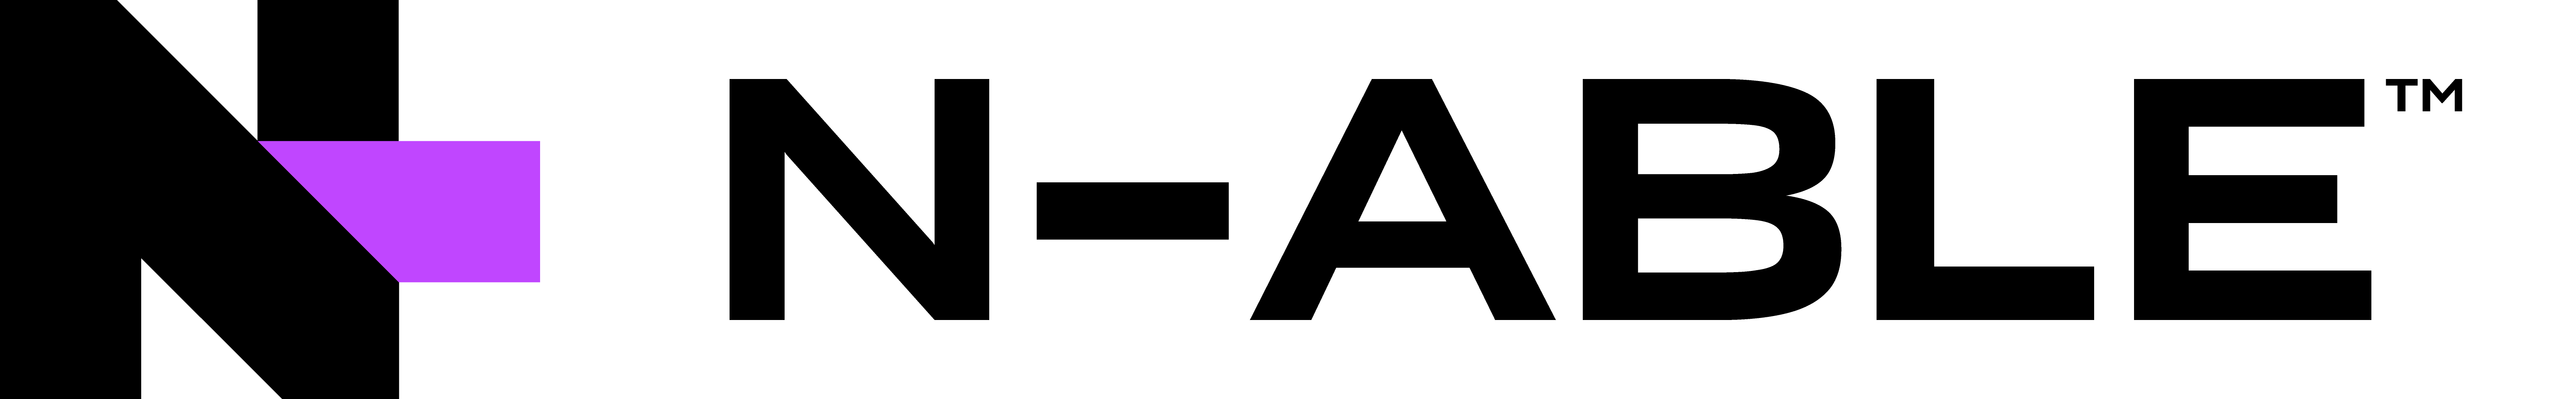 logo n-able itpartners